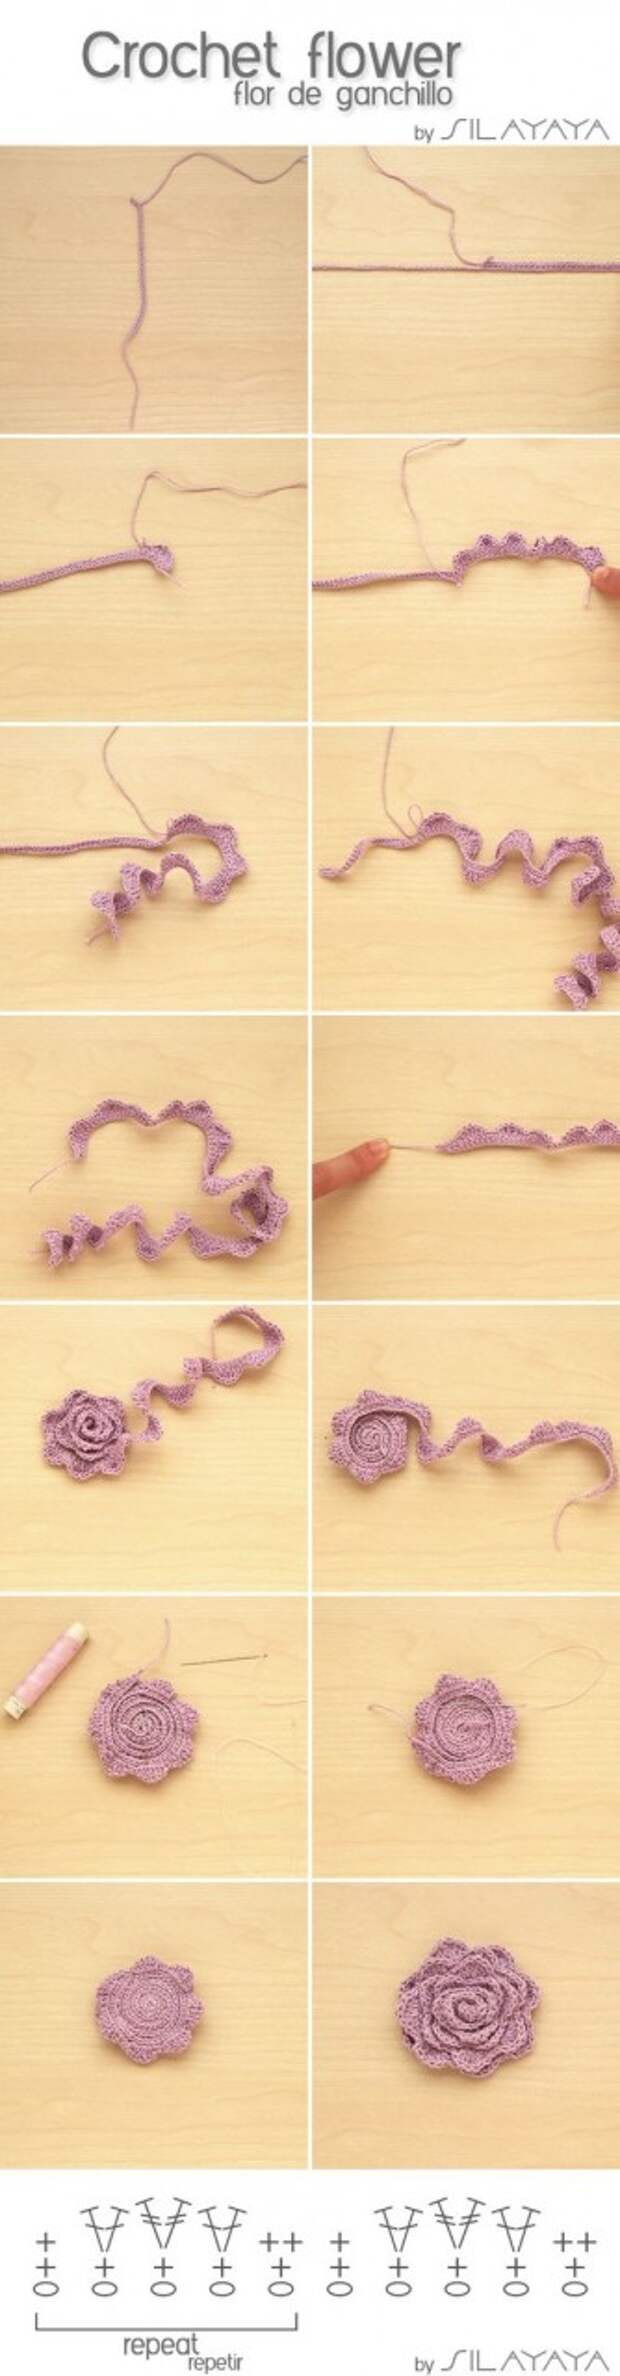 Tutorial How to crochet a flower: 